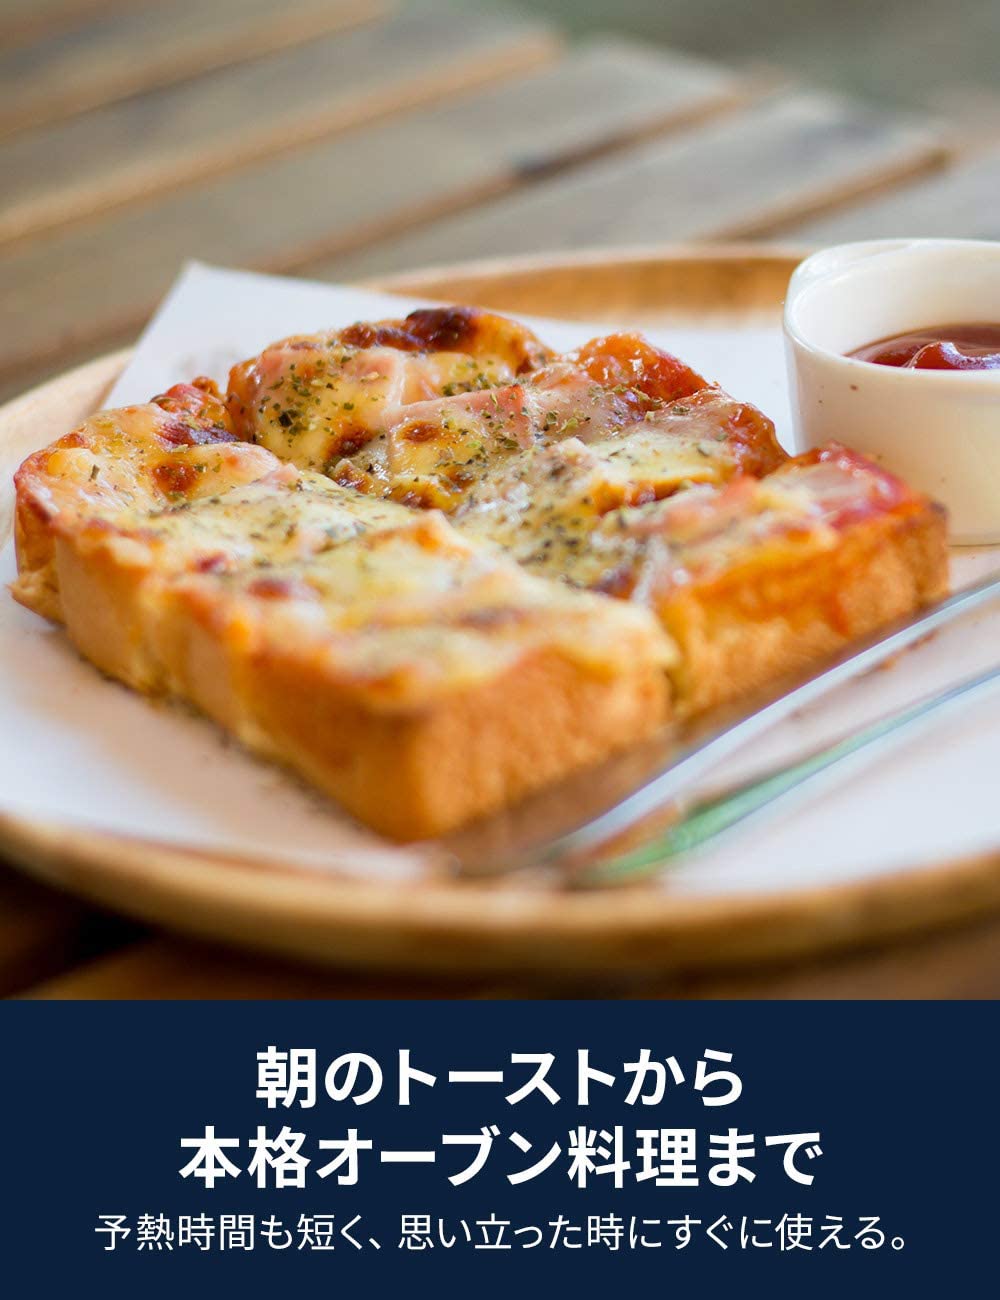 【DeLonghi】オーブン&トースター GR